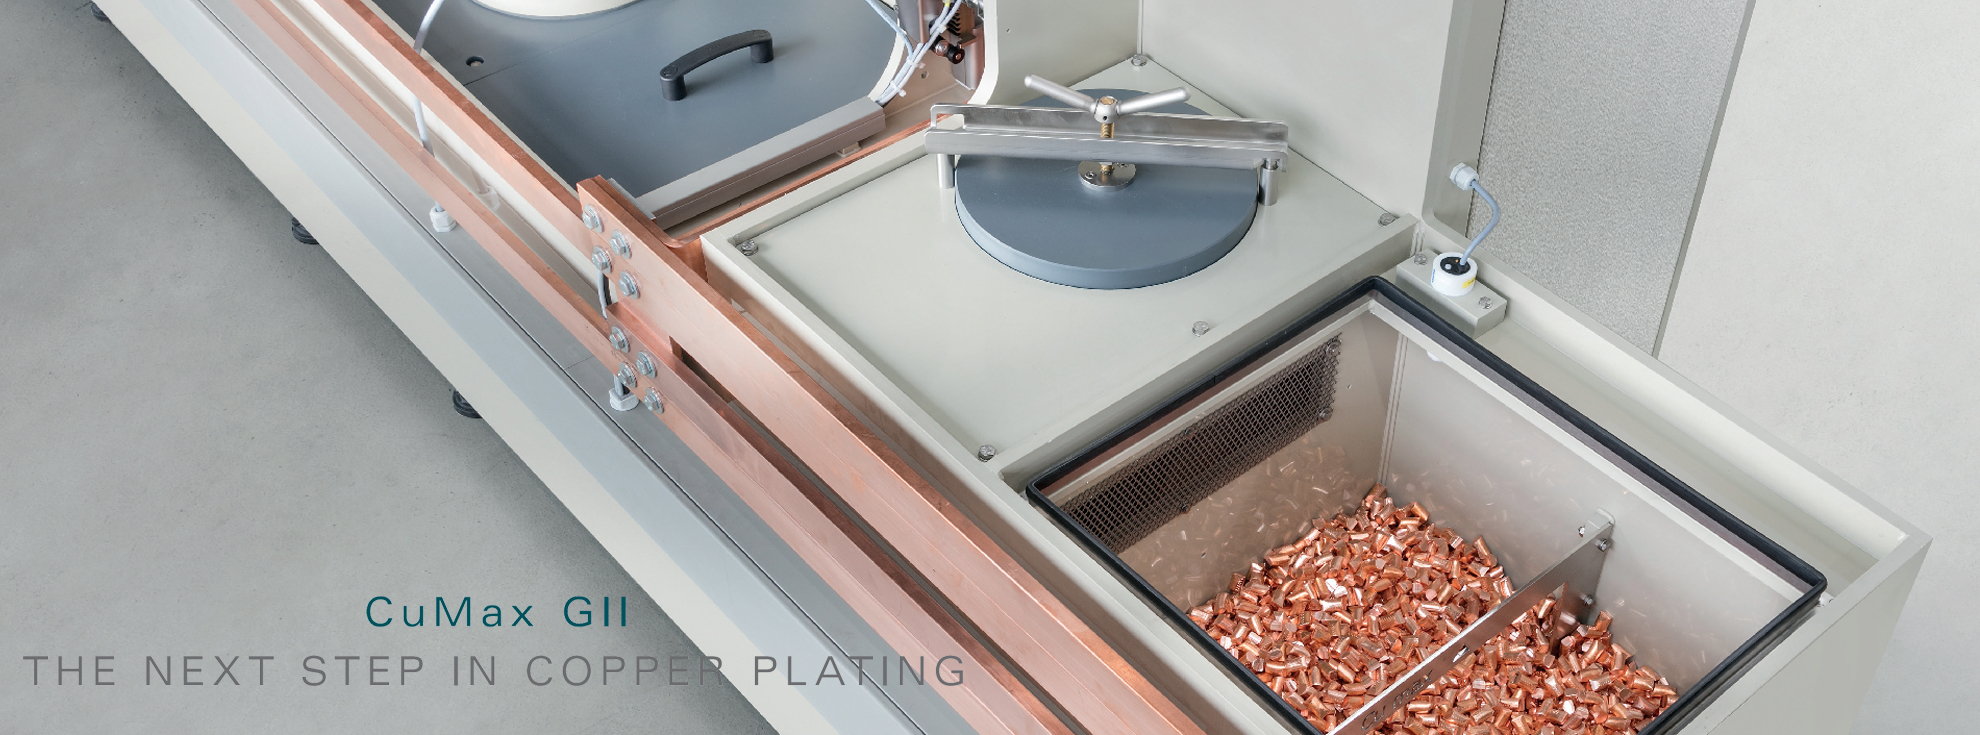 EconoLine Copper Plating - CuMax technology